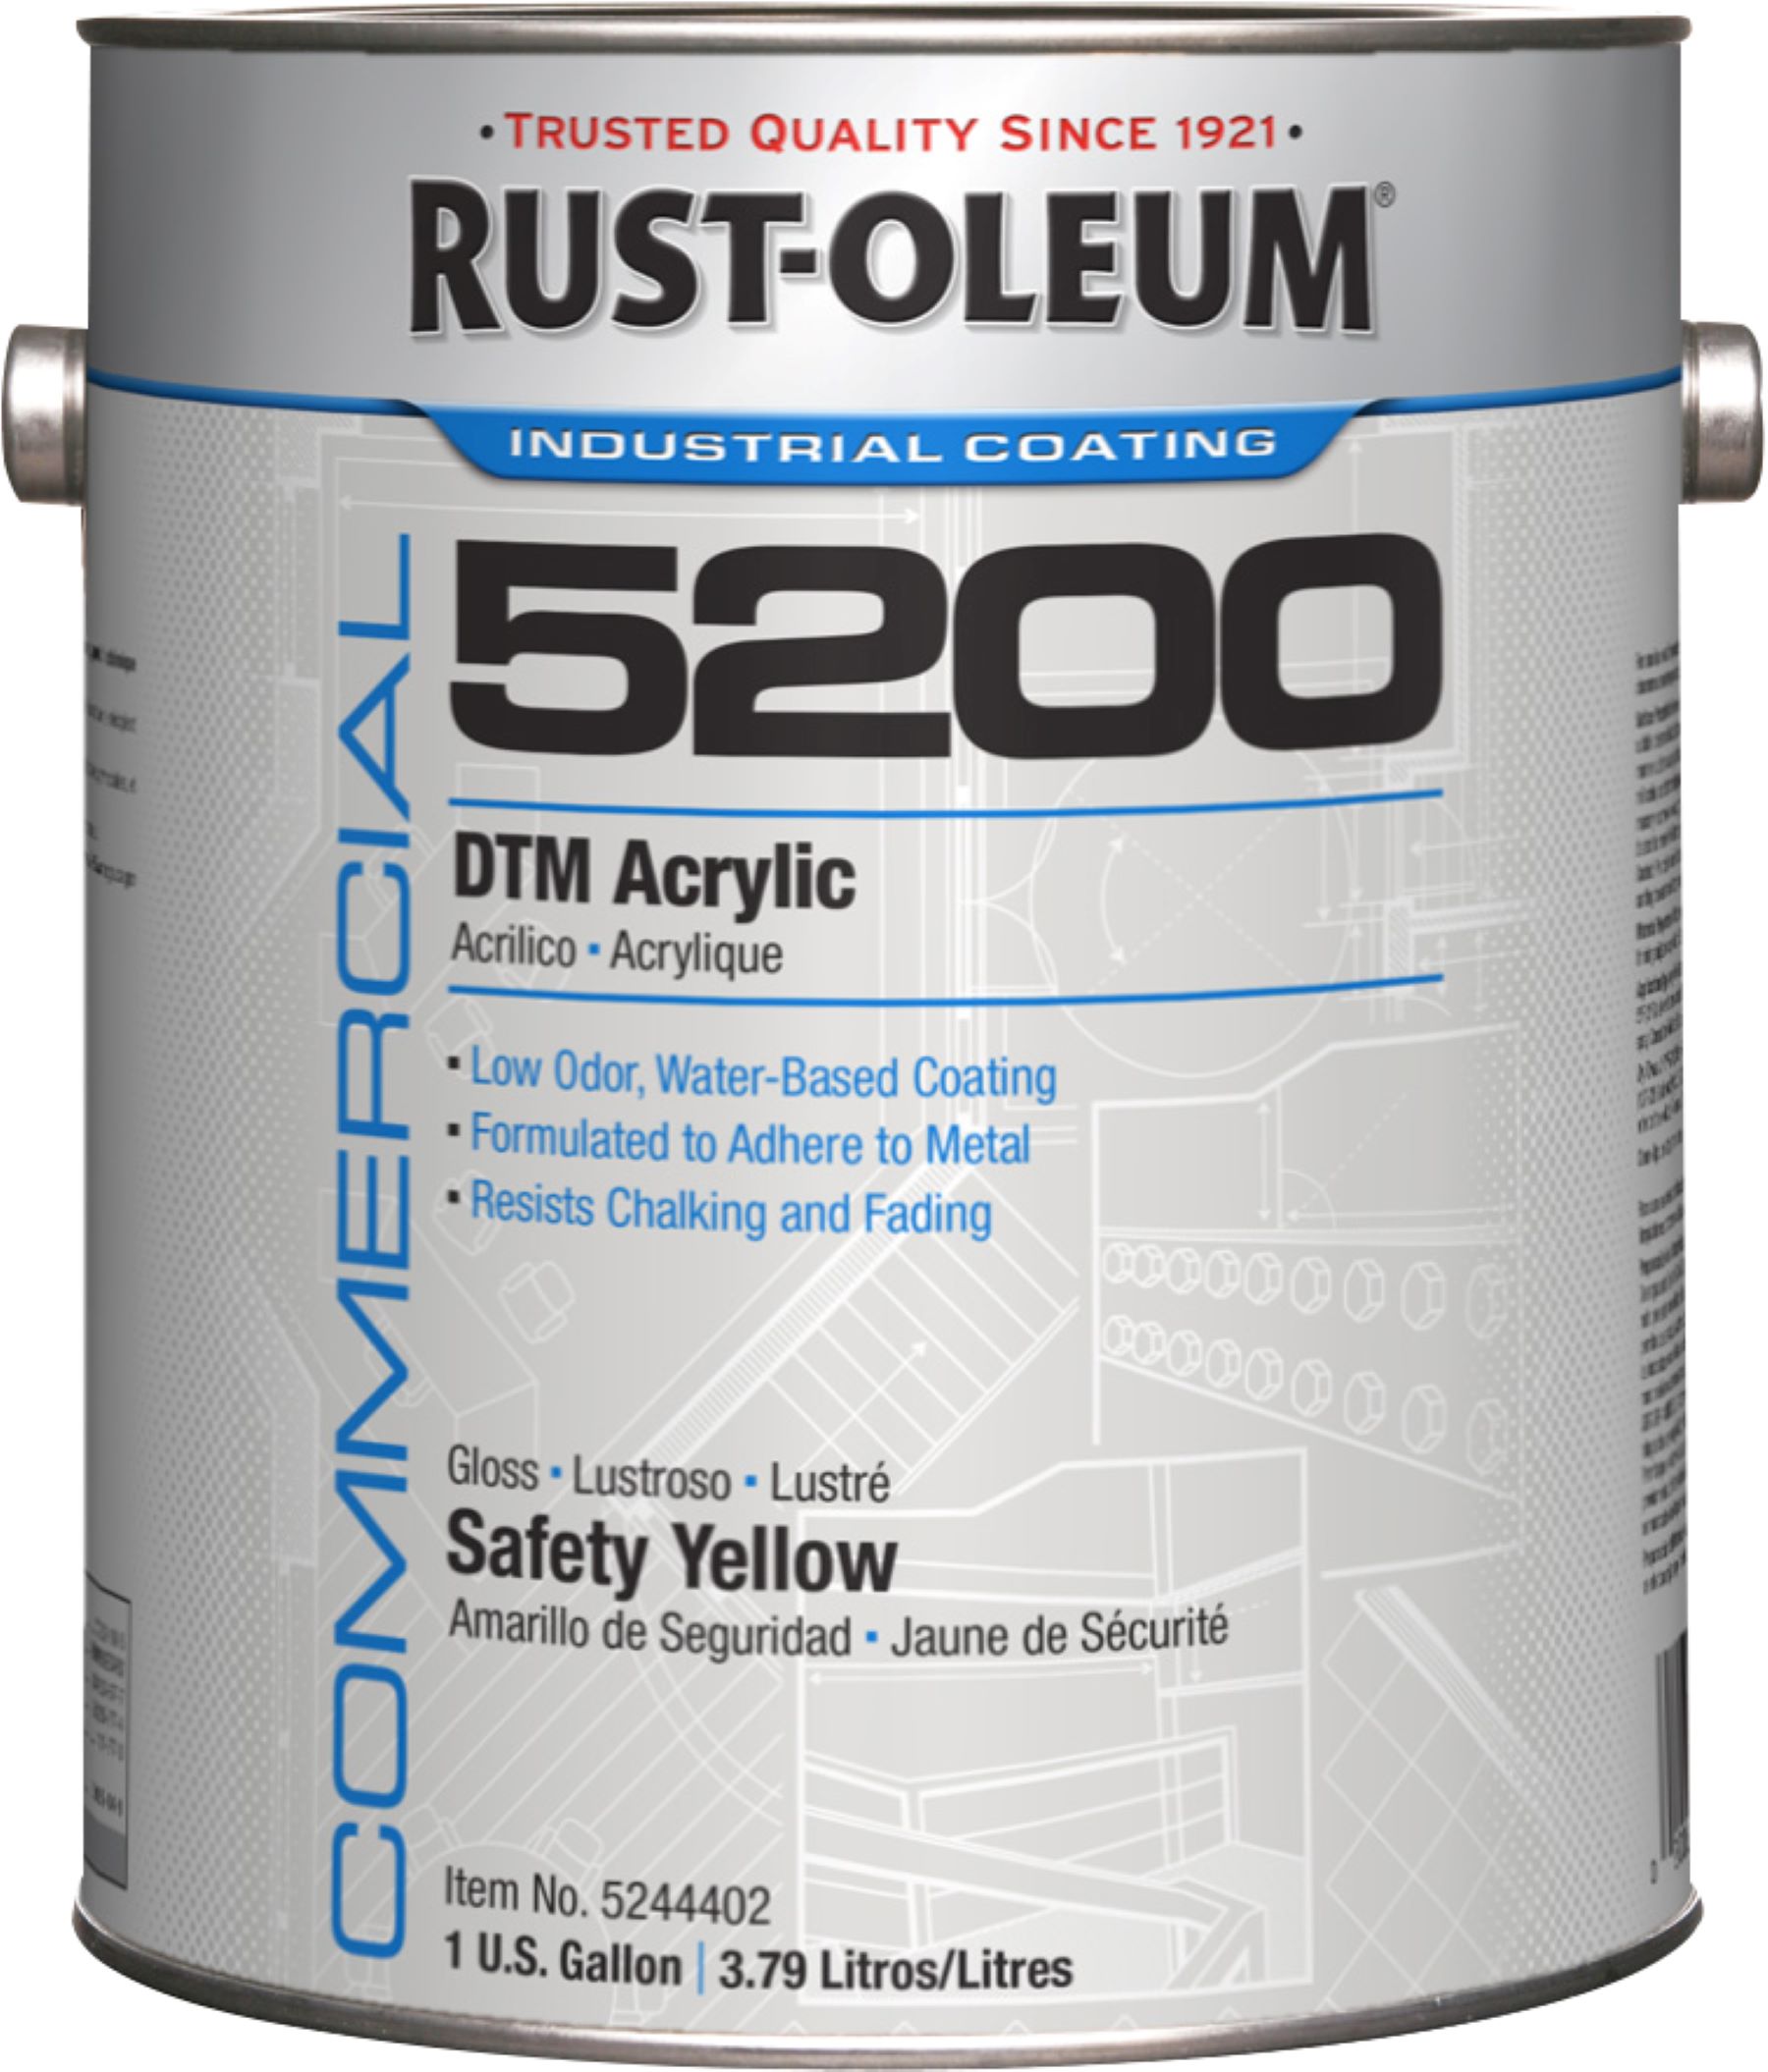 Rust-Oleum 1 gal. Paint Stripper for Concrete (4-Pack)